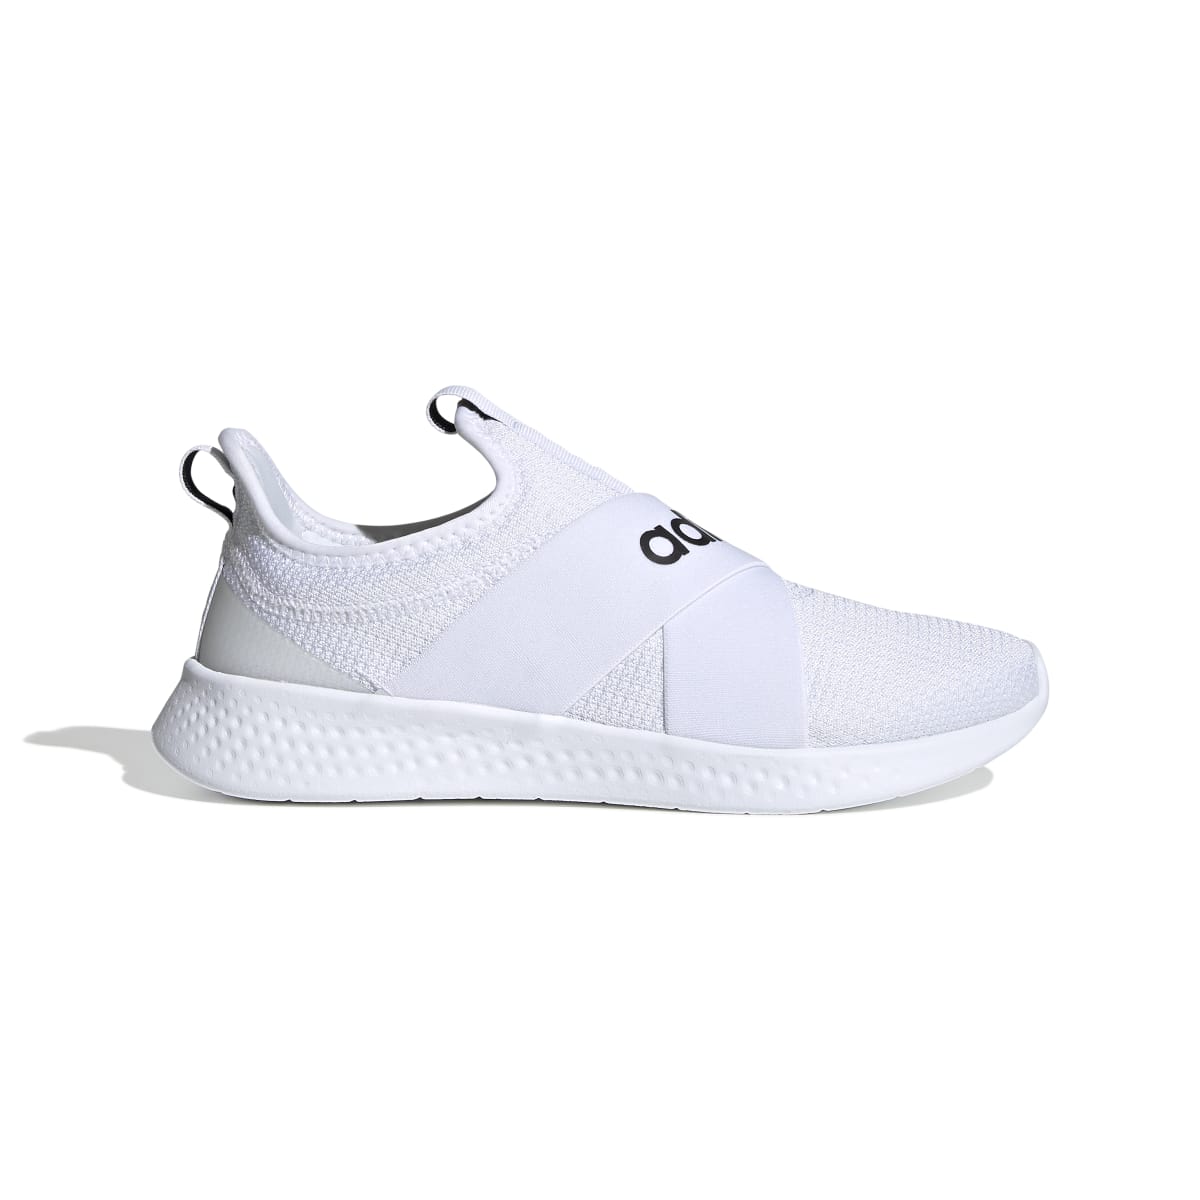 ADIDAS FX7325 PUREMOTION ADAPT WMN'S (Medium) White/White/Grey Textile Running Shoes